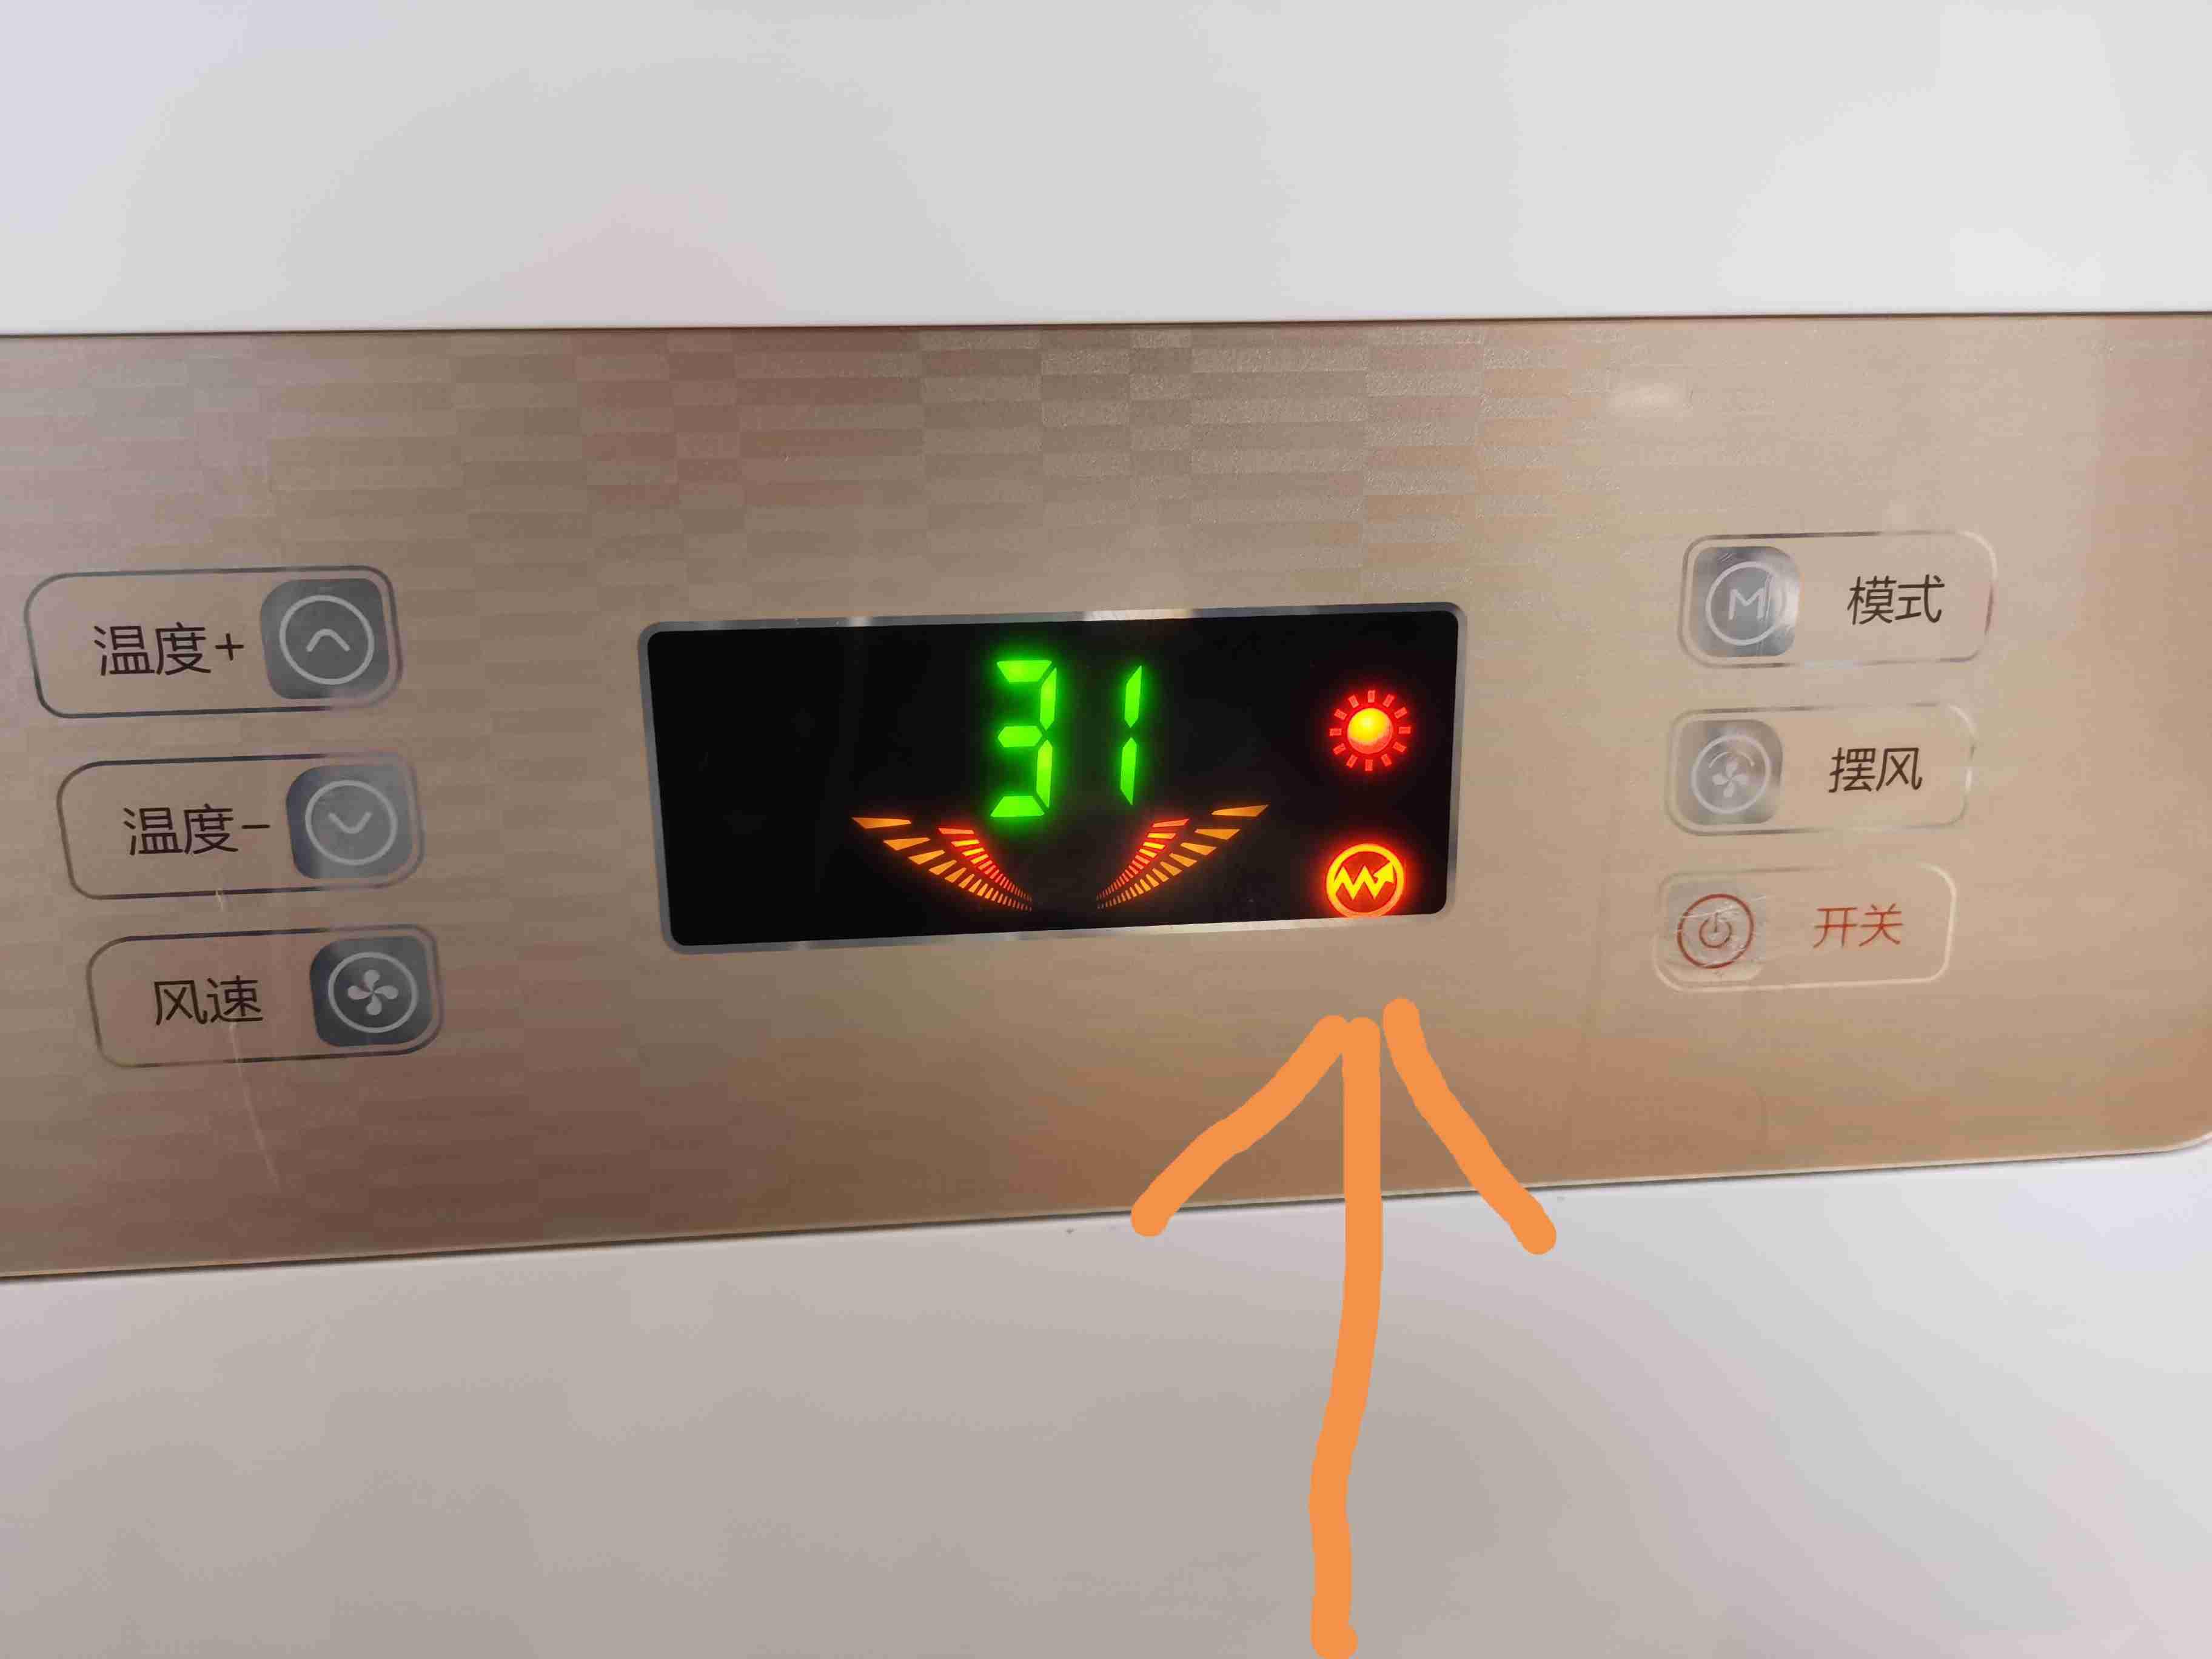 tcl空调制热模式的标志图片